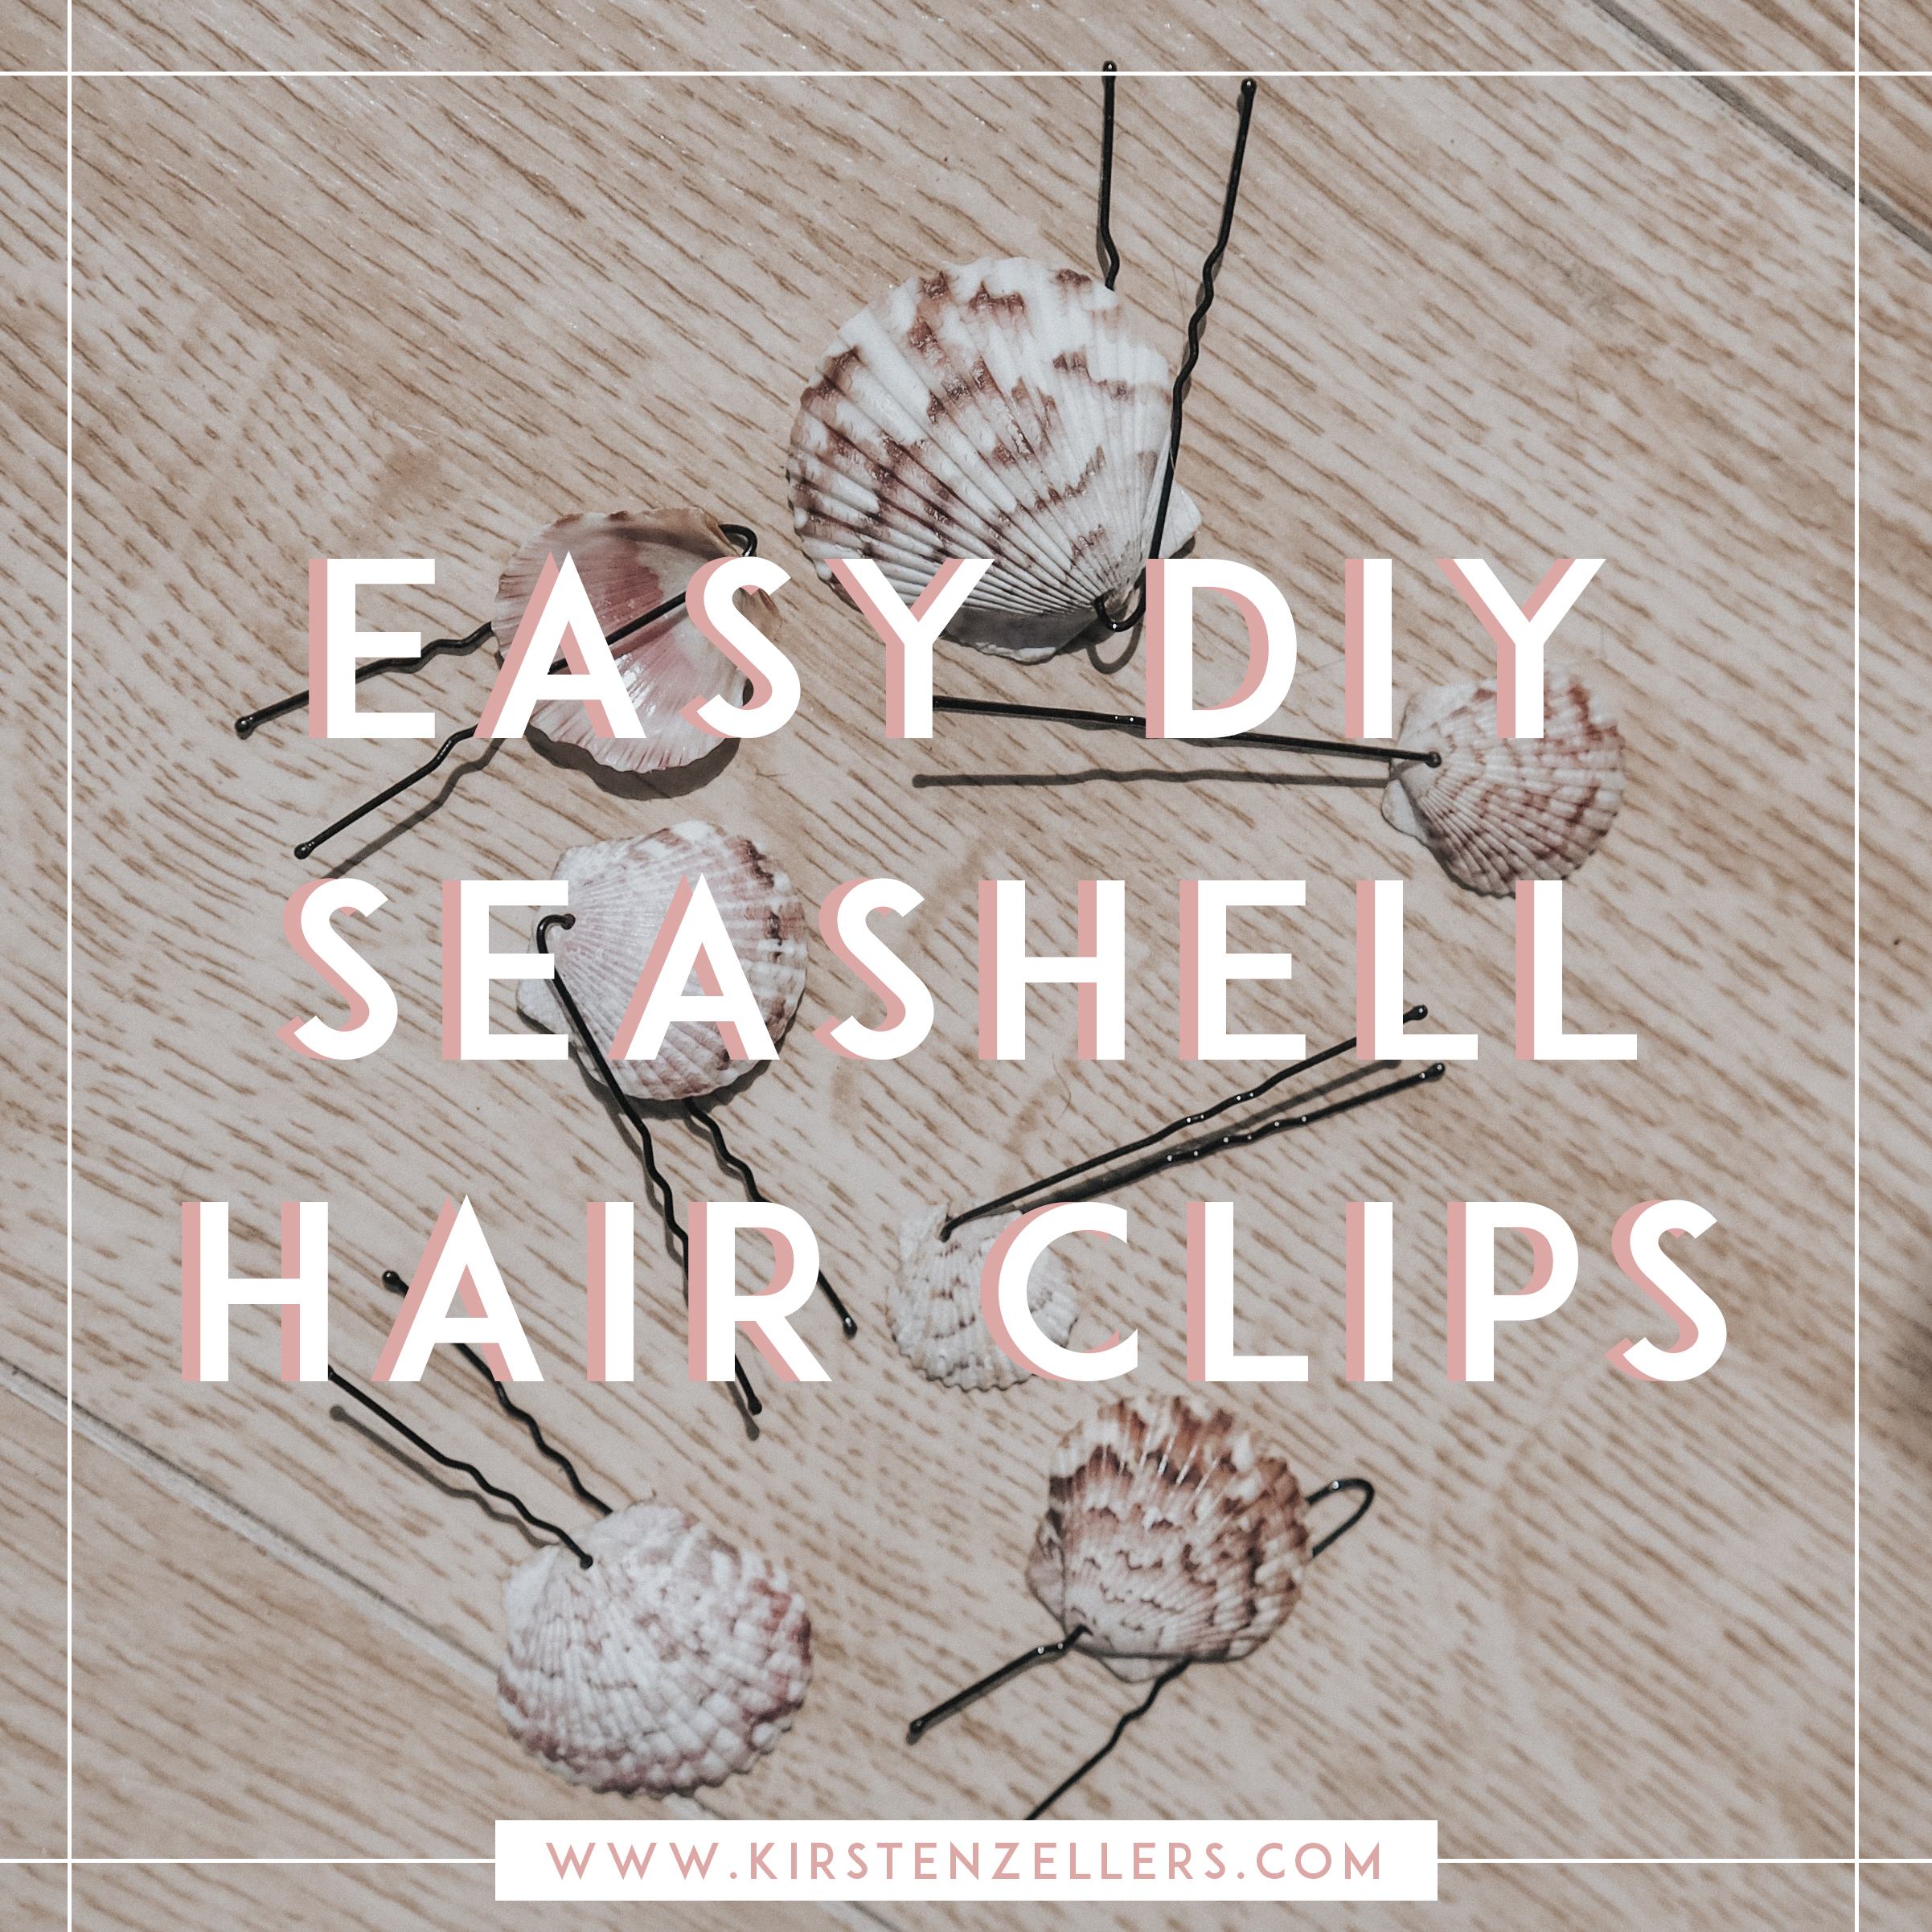 Easy DIY Sea Shell Hair Clips | Kirsten Zellers